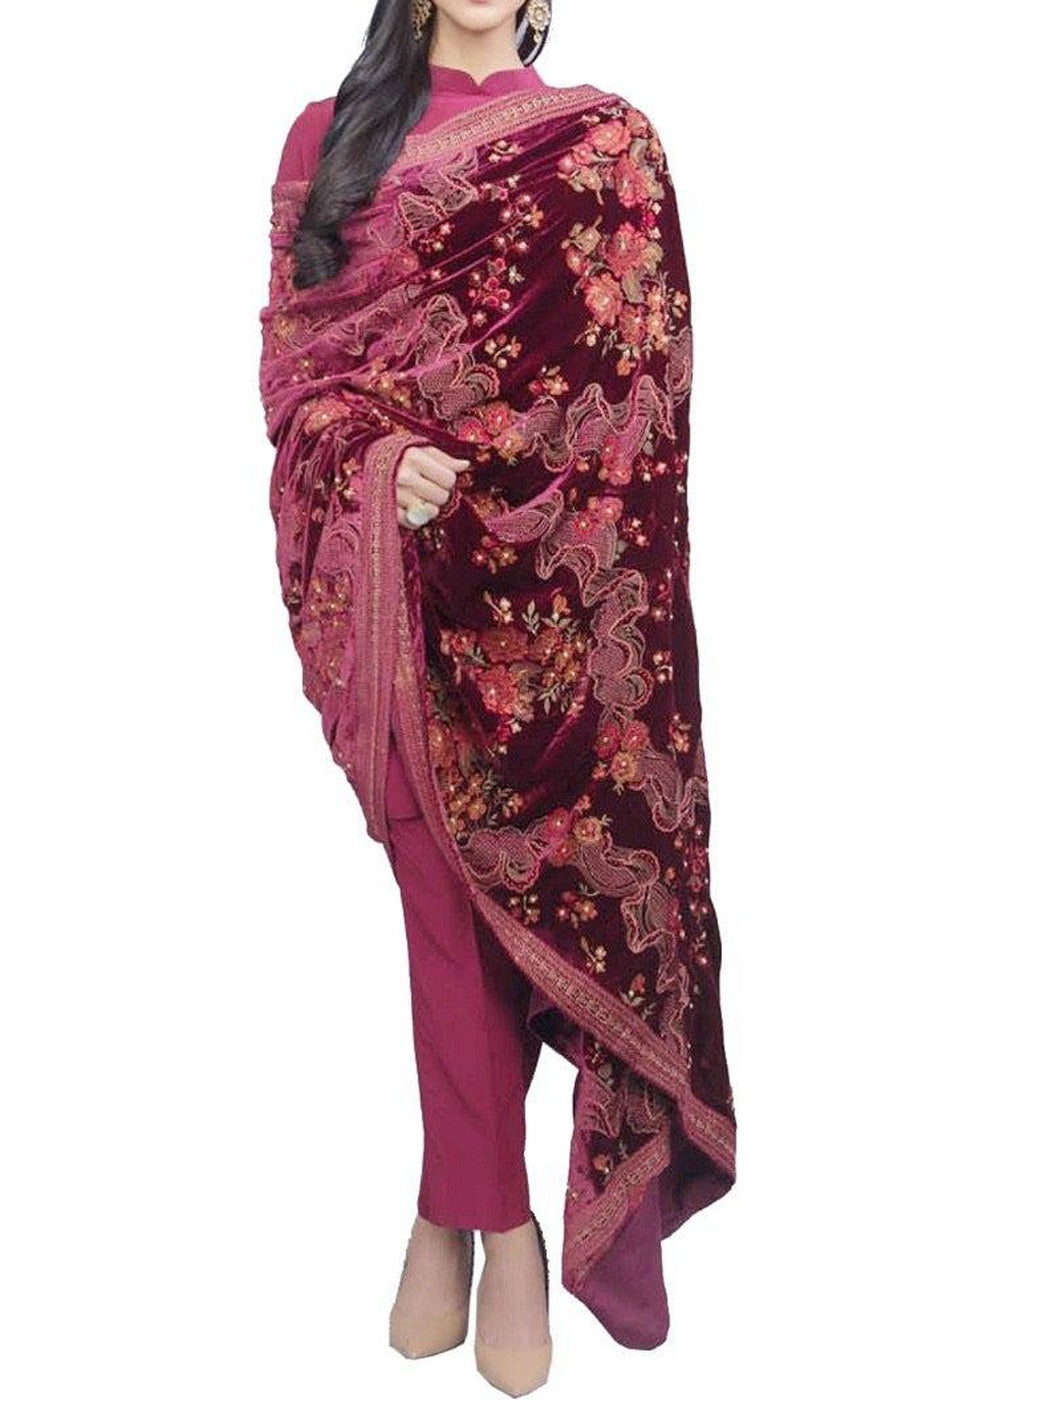 Sarinnah Premium 33-Embroided Fine quality Velvet shawl.